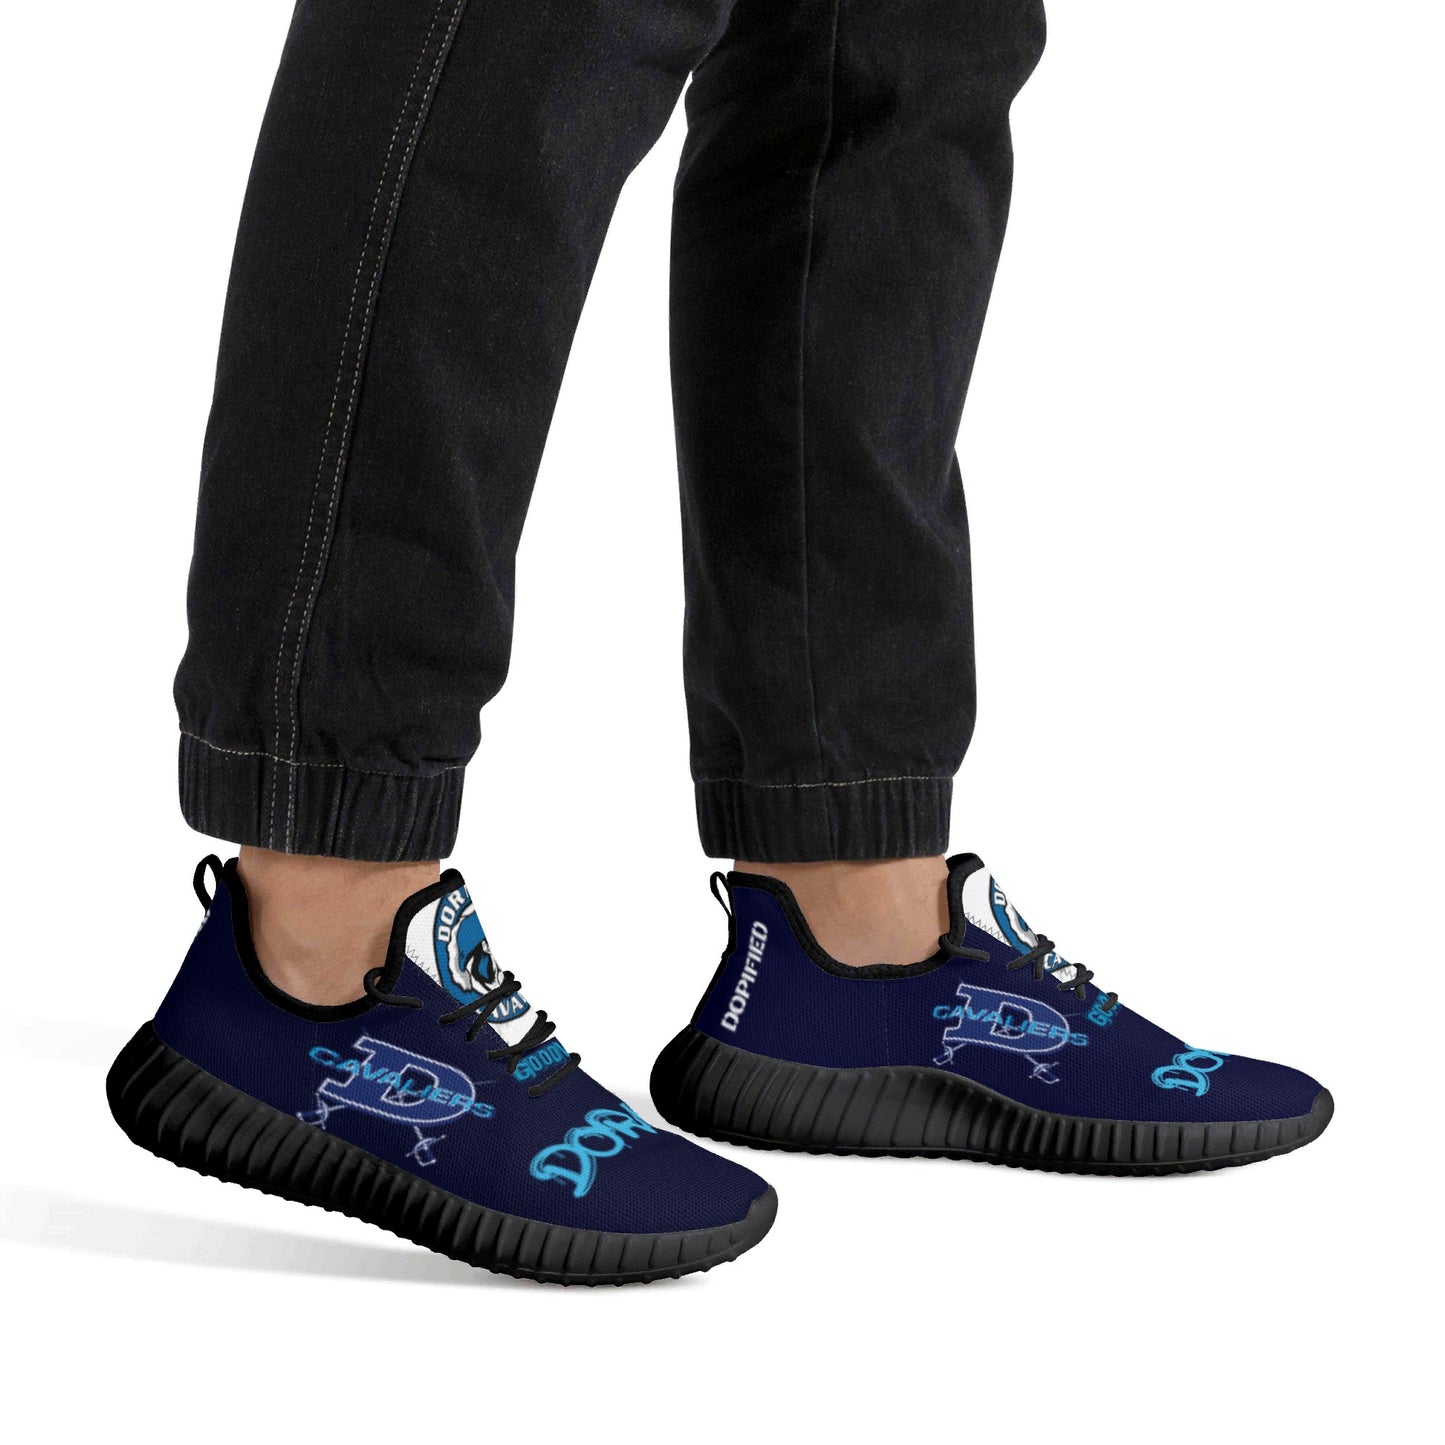 "DORMAN Cavs ViBes" Men's Mesh Knit Sneakers